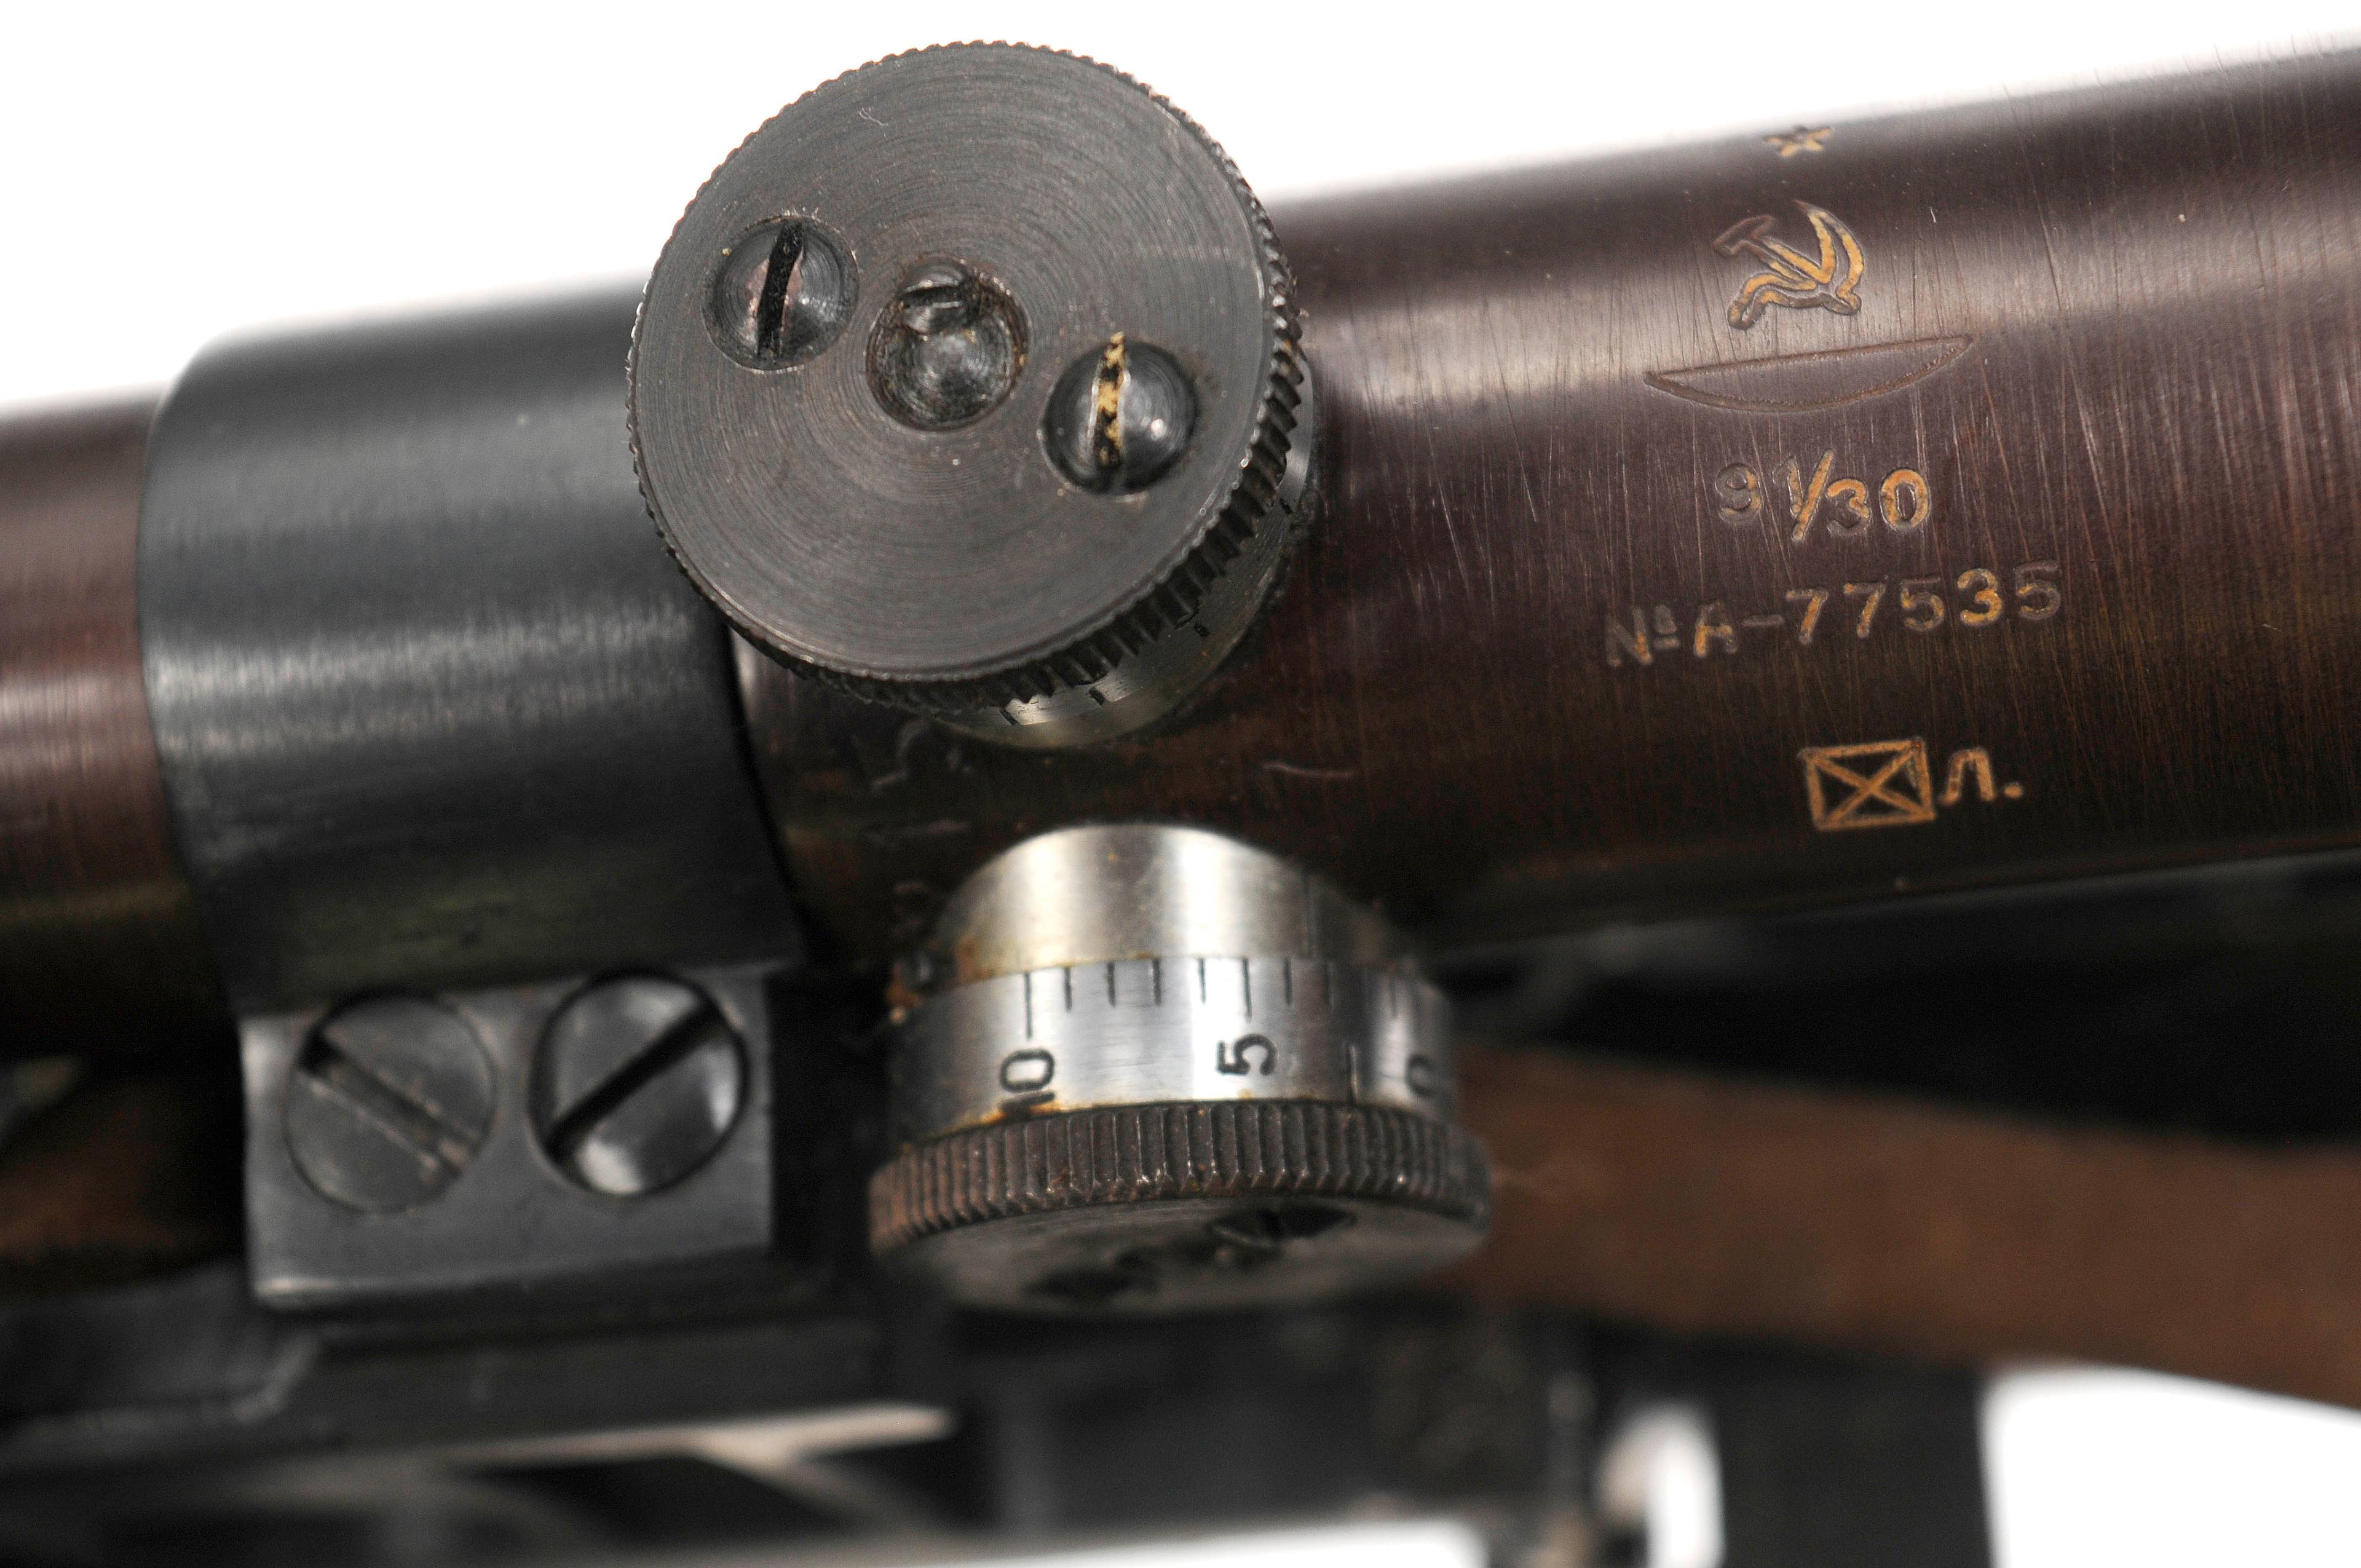 Soviet Military WWII era 91/30 7.62x54r Bolt-Action Sniper Rifle - FFL # 24925 (CQQ1)